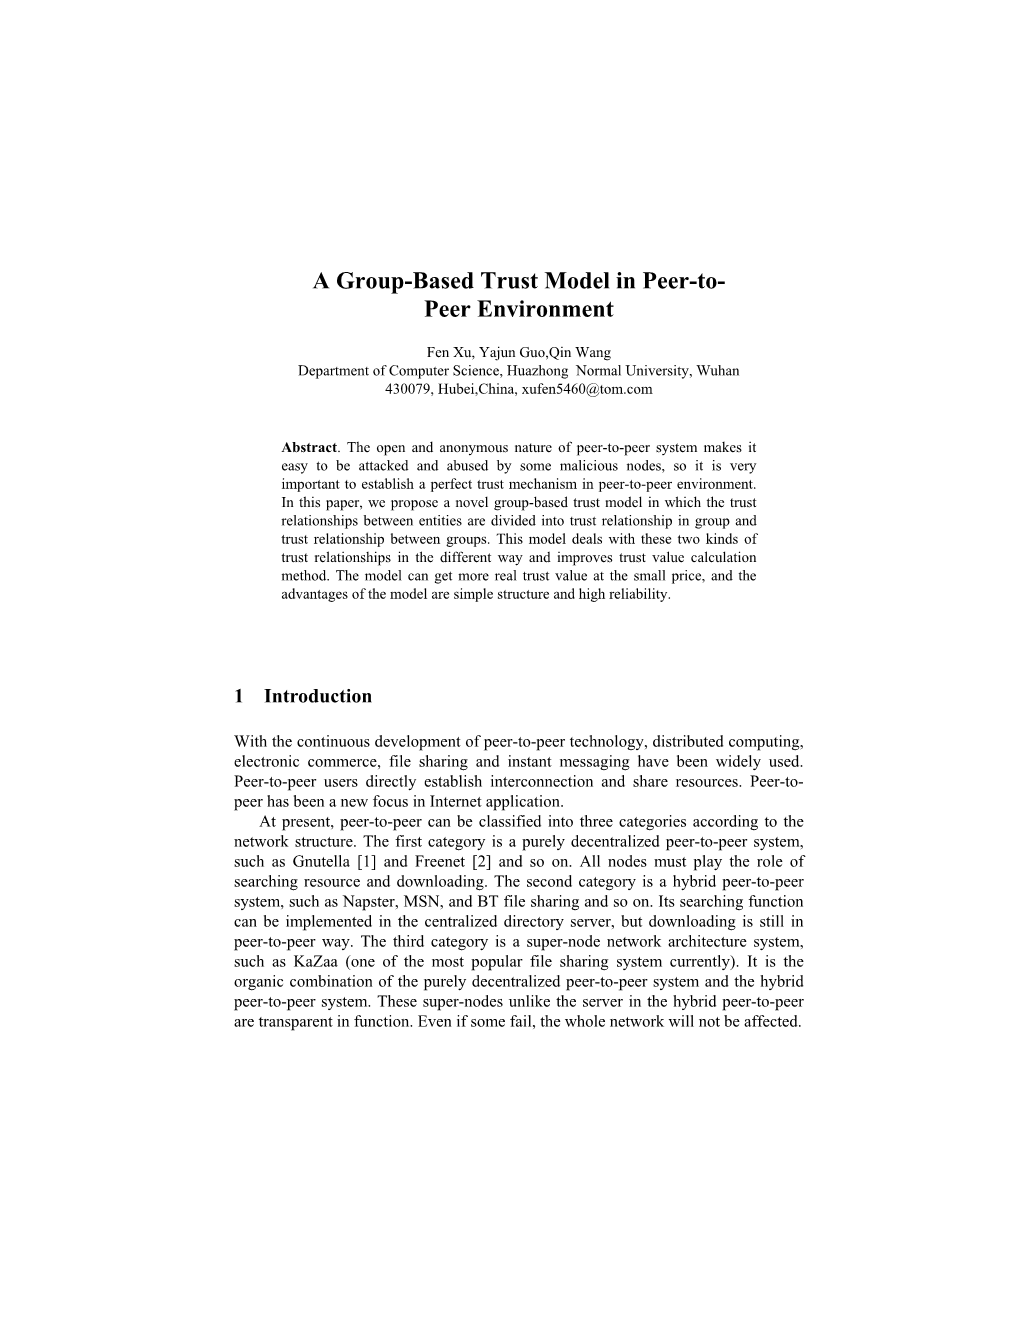 A Group-Based Trust Model in Peer-To-Peer Environment